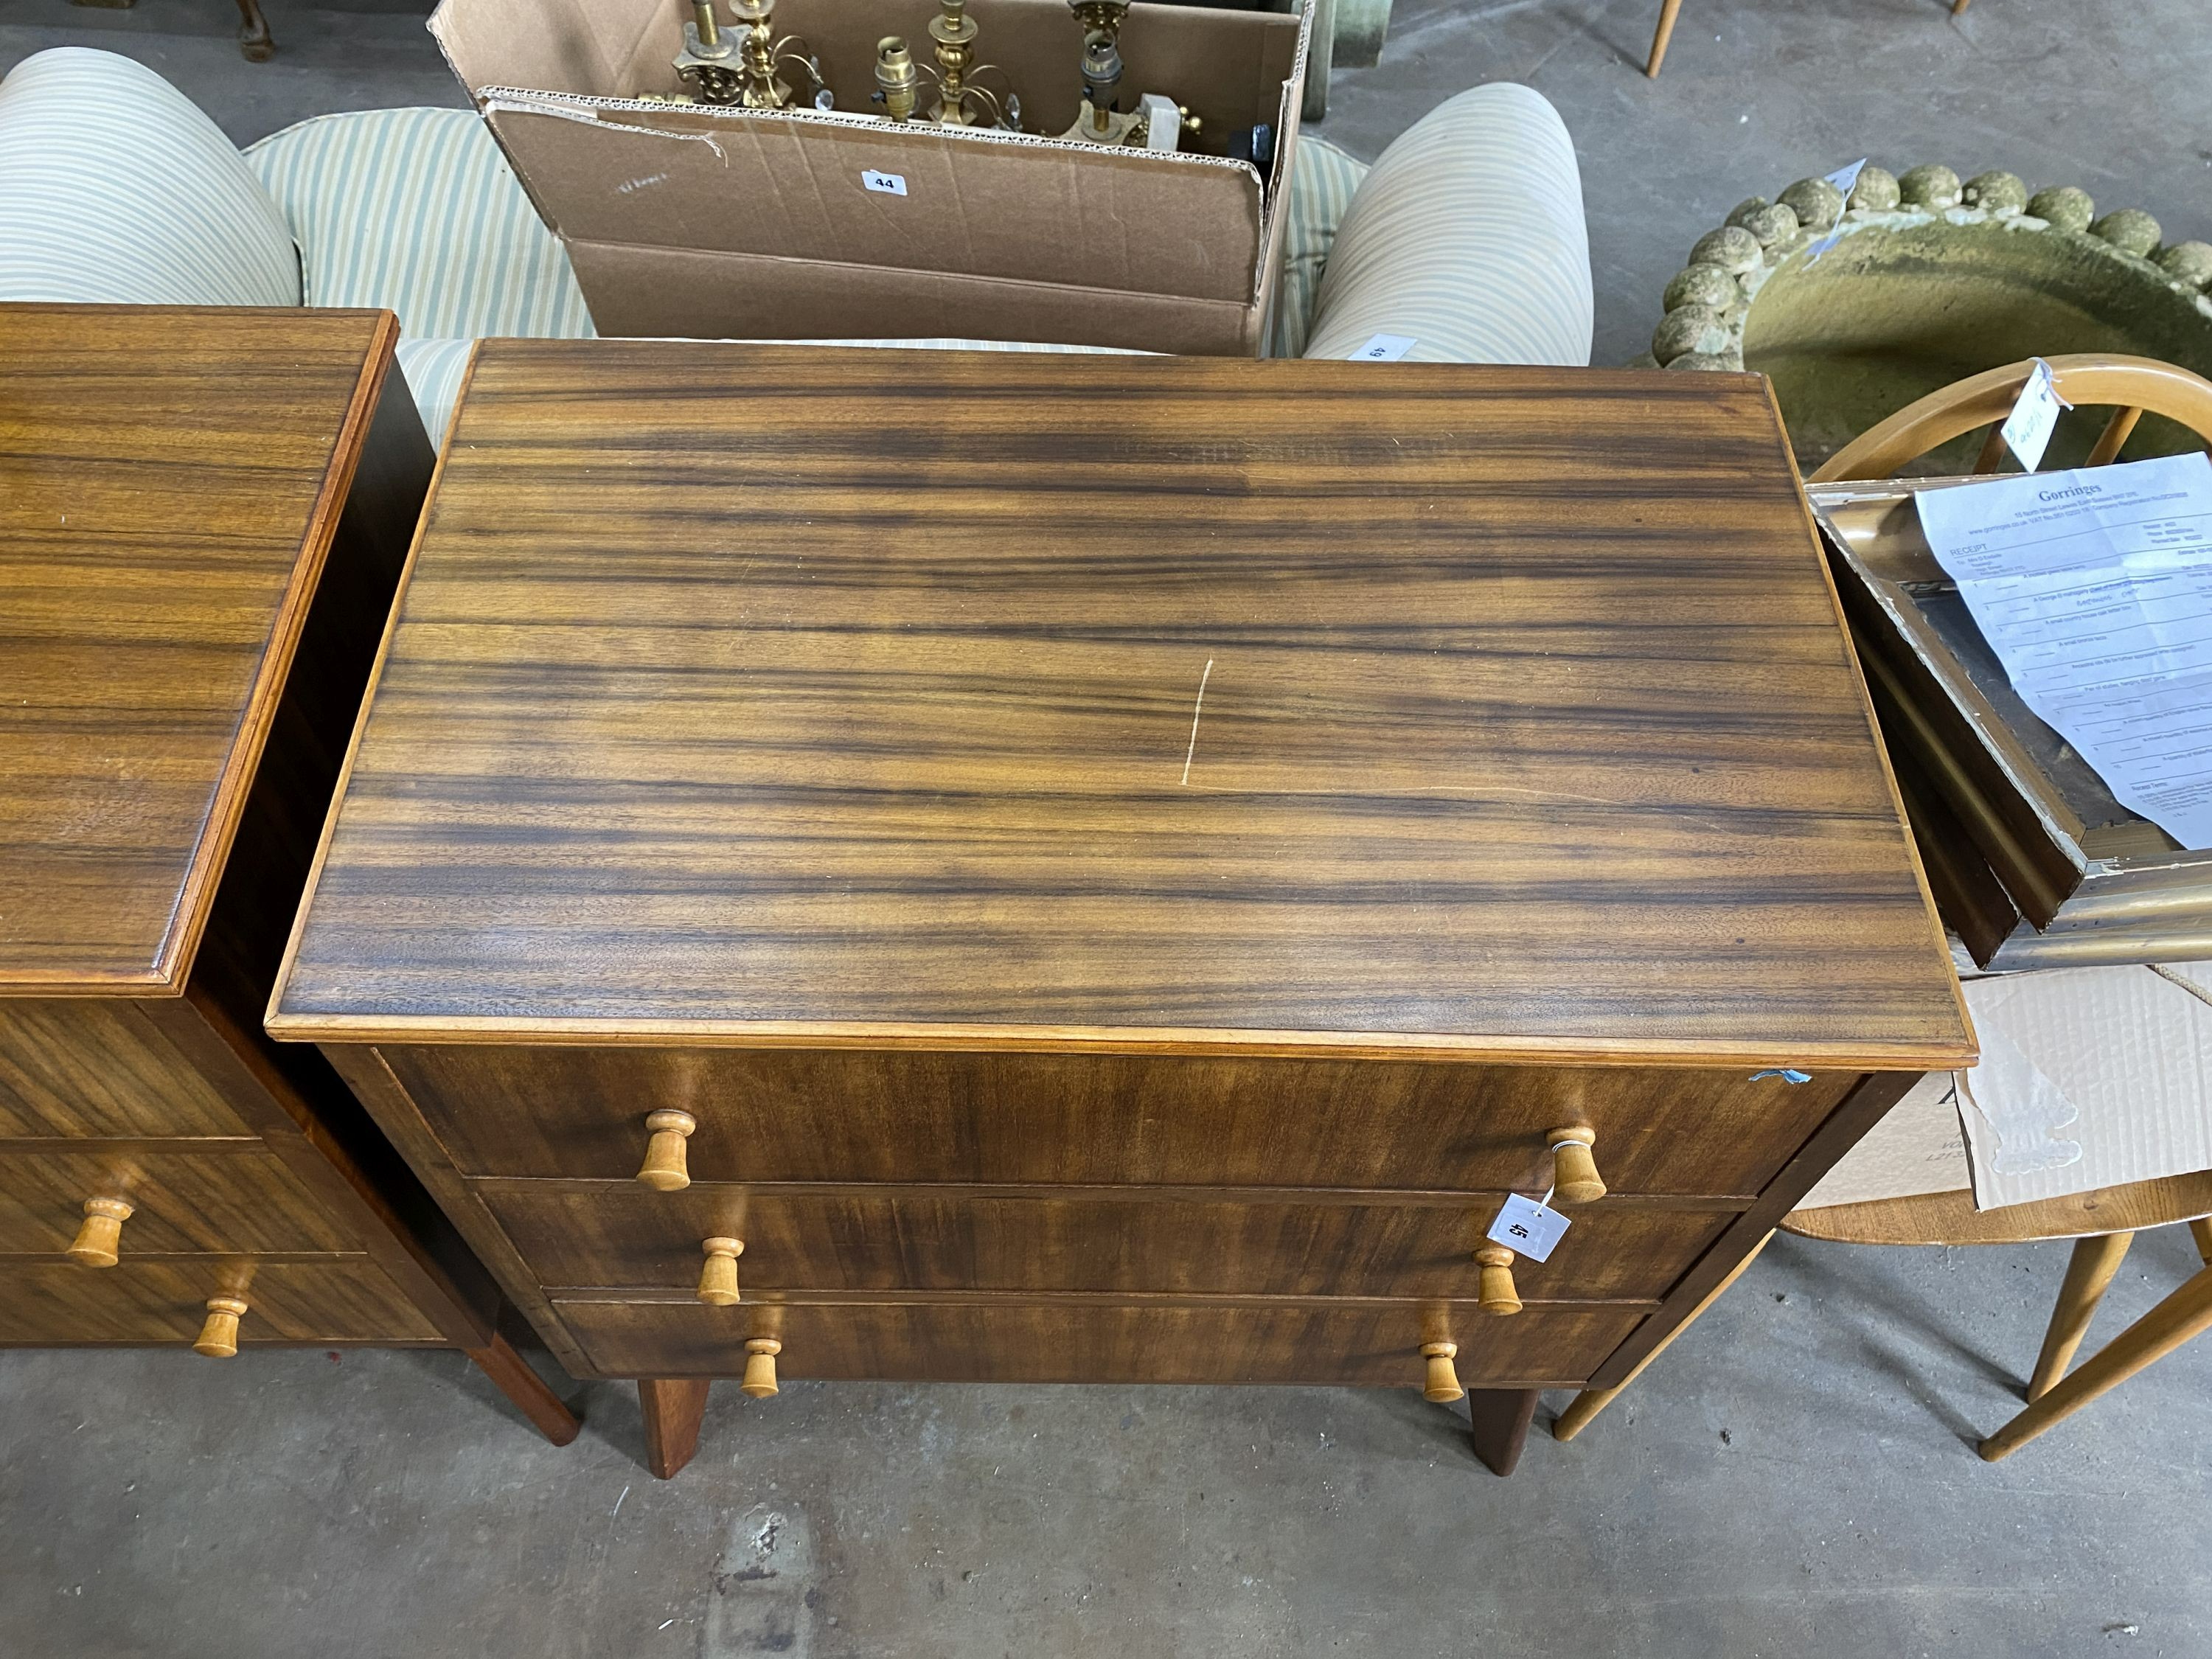 A pair of 1960s Morris Of Glasgow walnut three drawer chests, width 79cm, depth 47cm, height 86cm